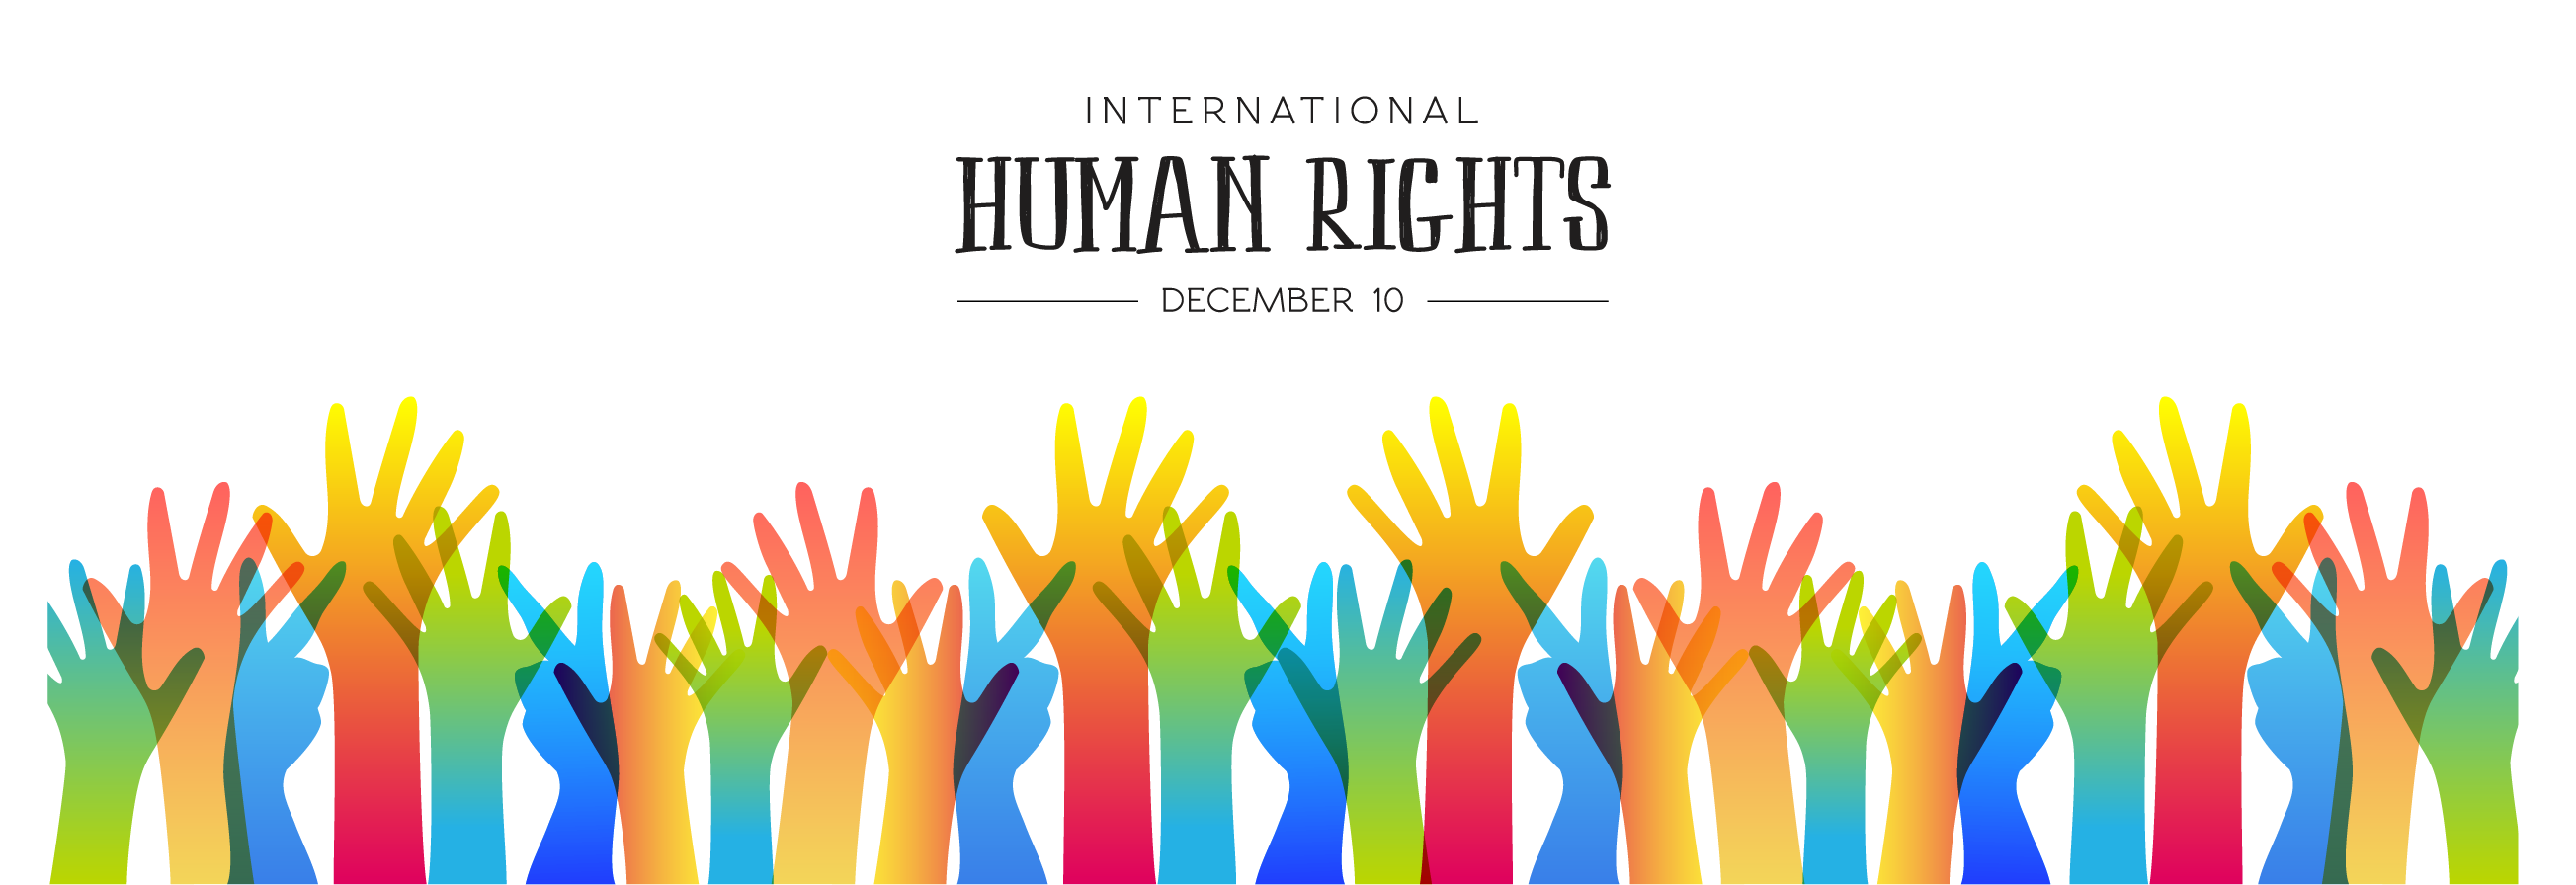 Human Rights International Day